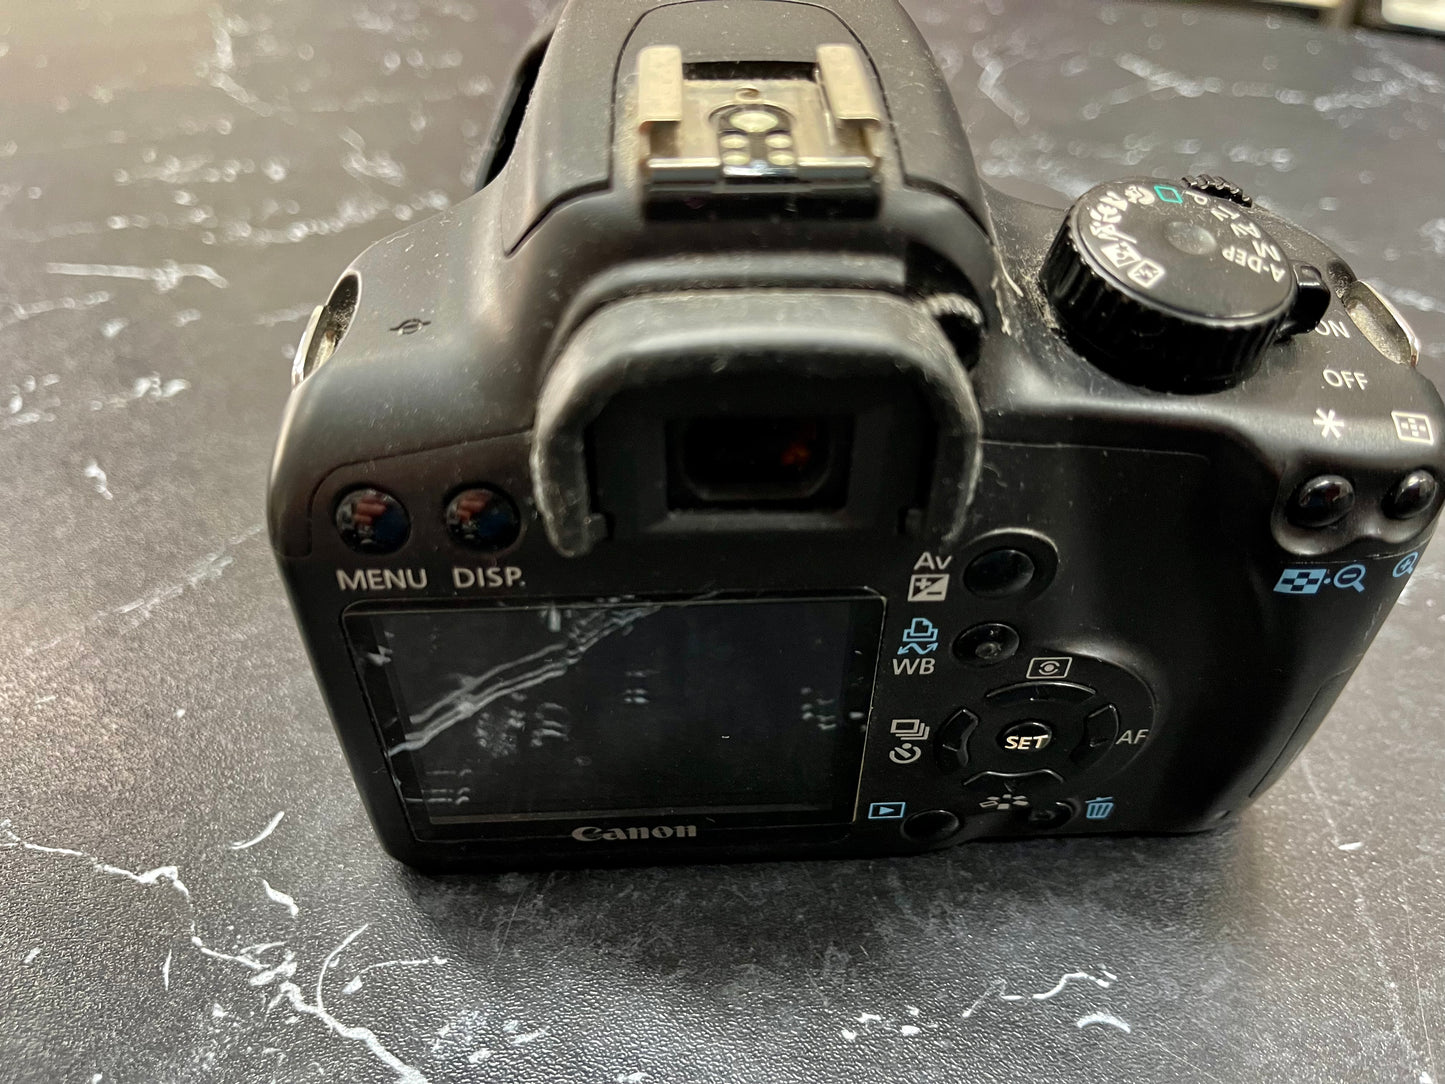 Canon EOS 1000D 10.1MP Digital SLR Camera